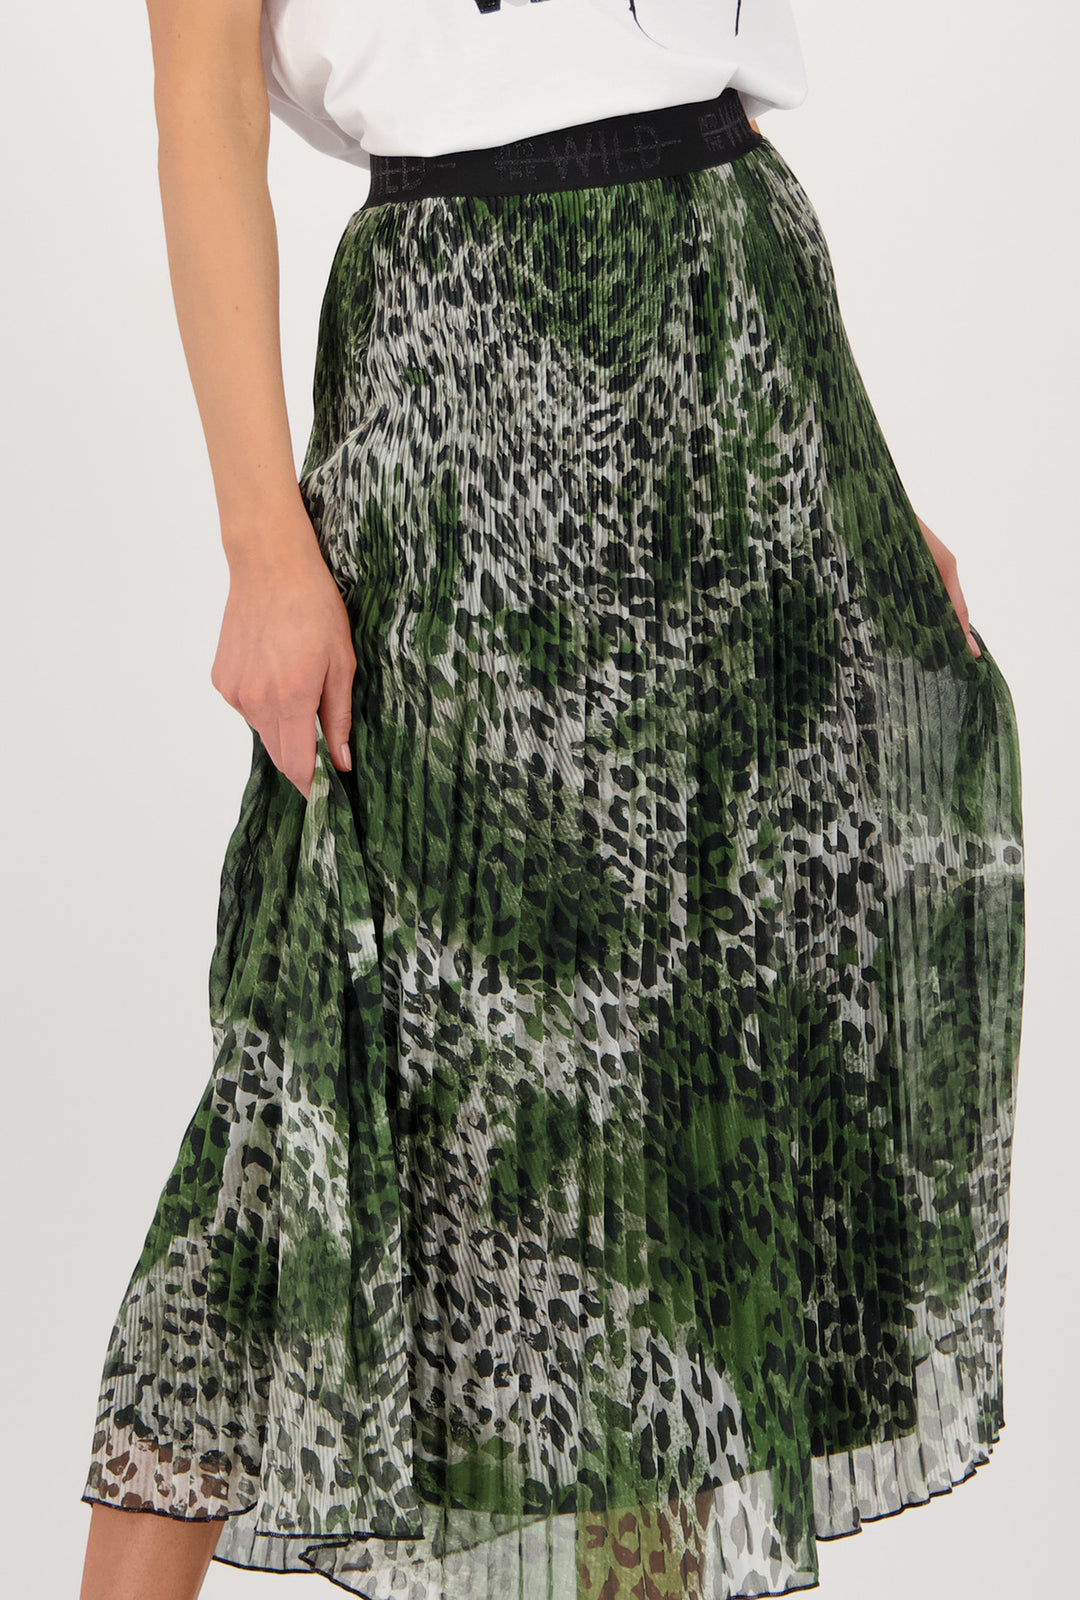 Monari 406265 Clover Pattern Skirt Lifestyle Front | Dotique